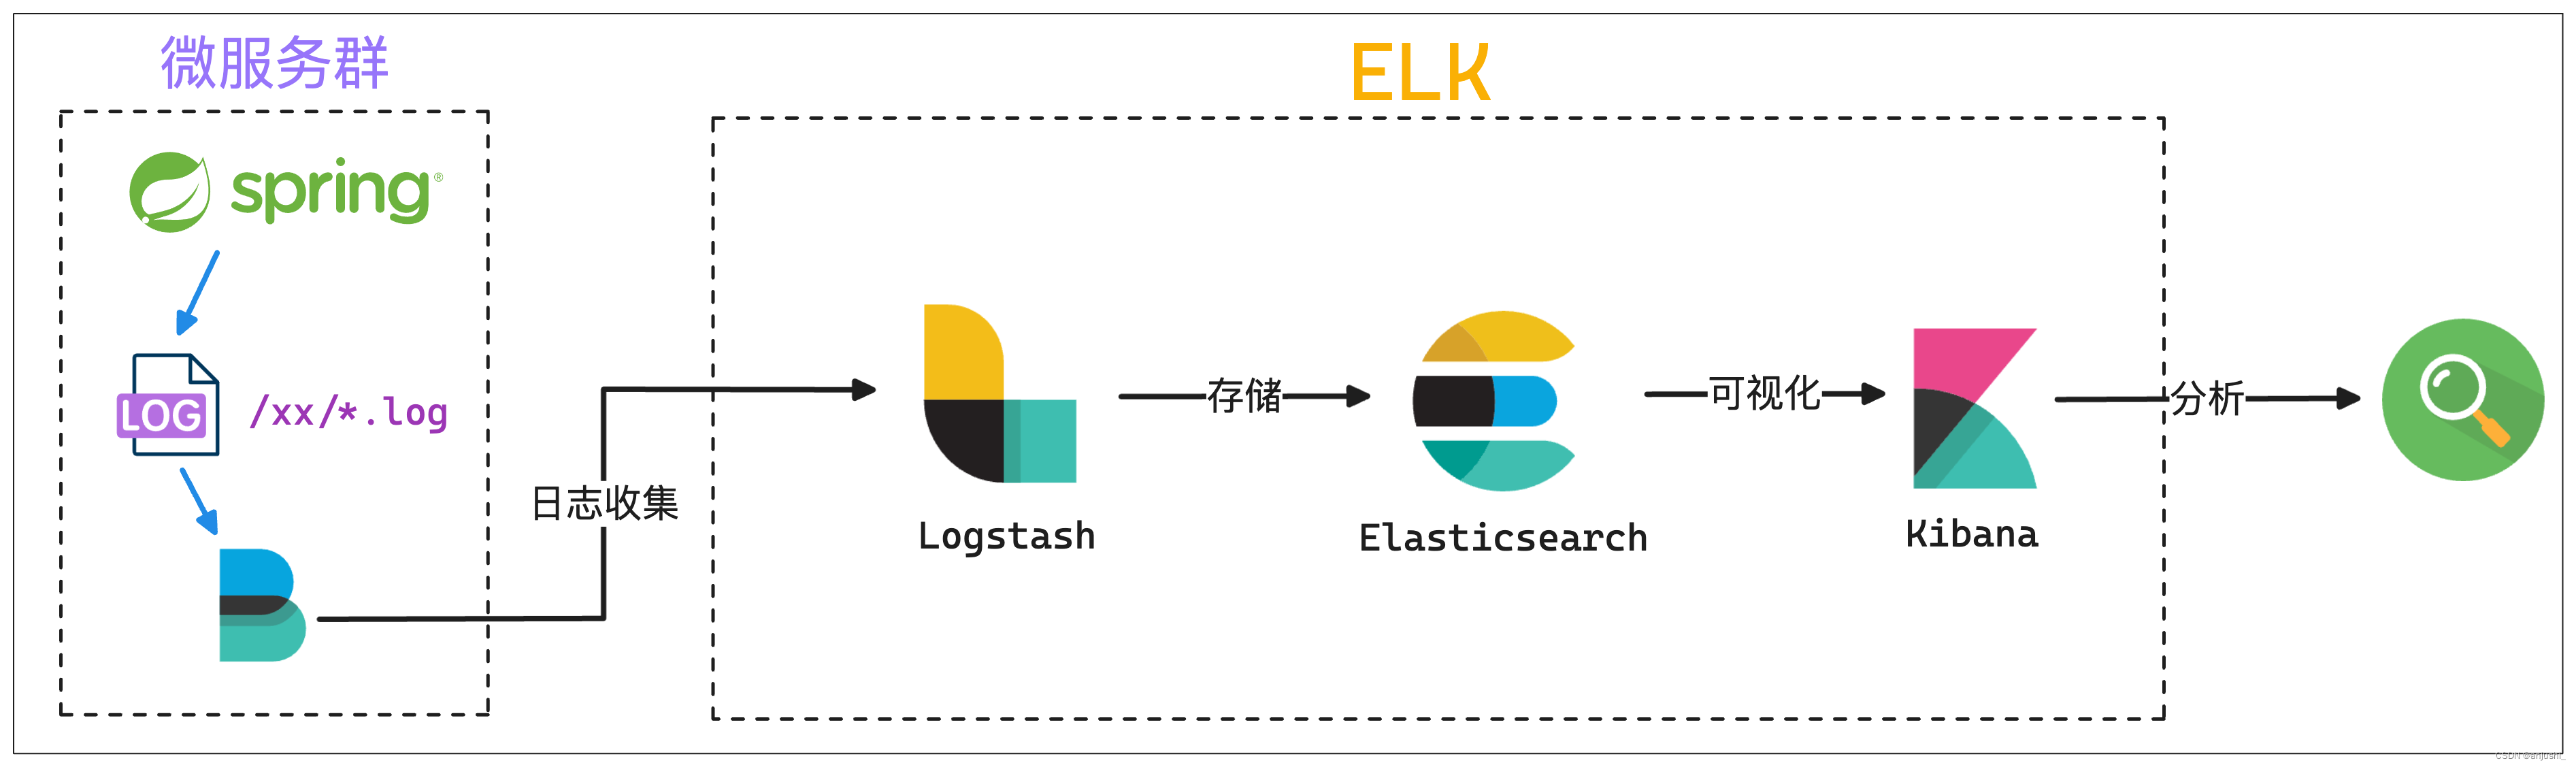 ELK日志框架图总结